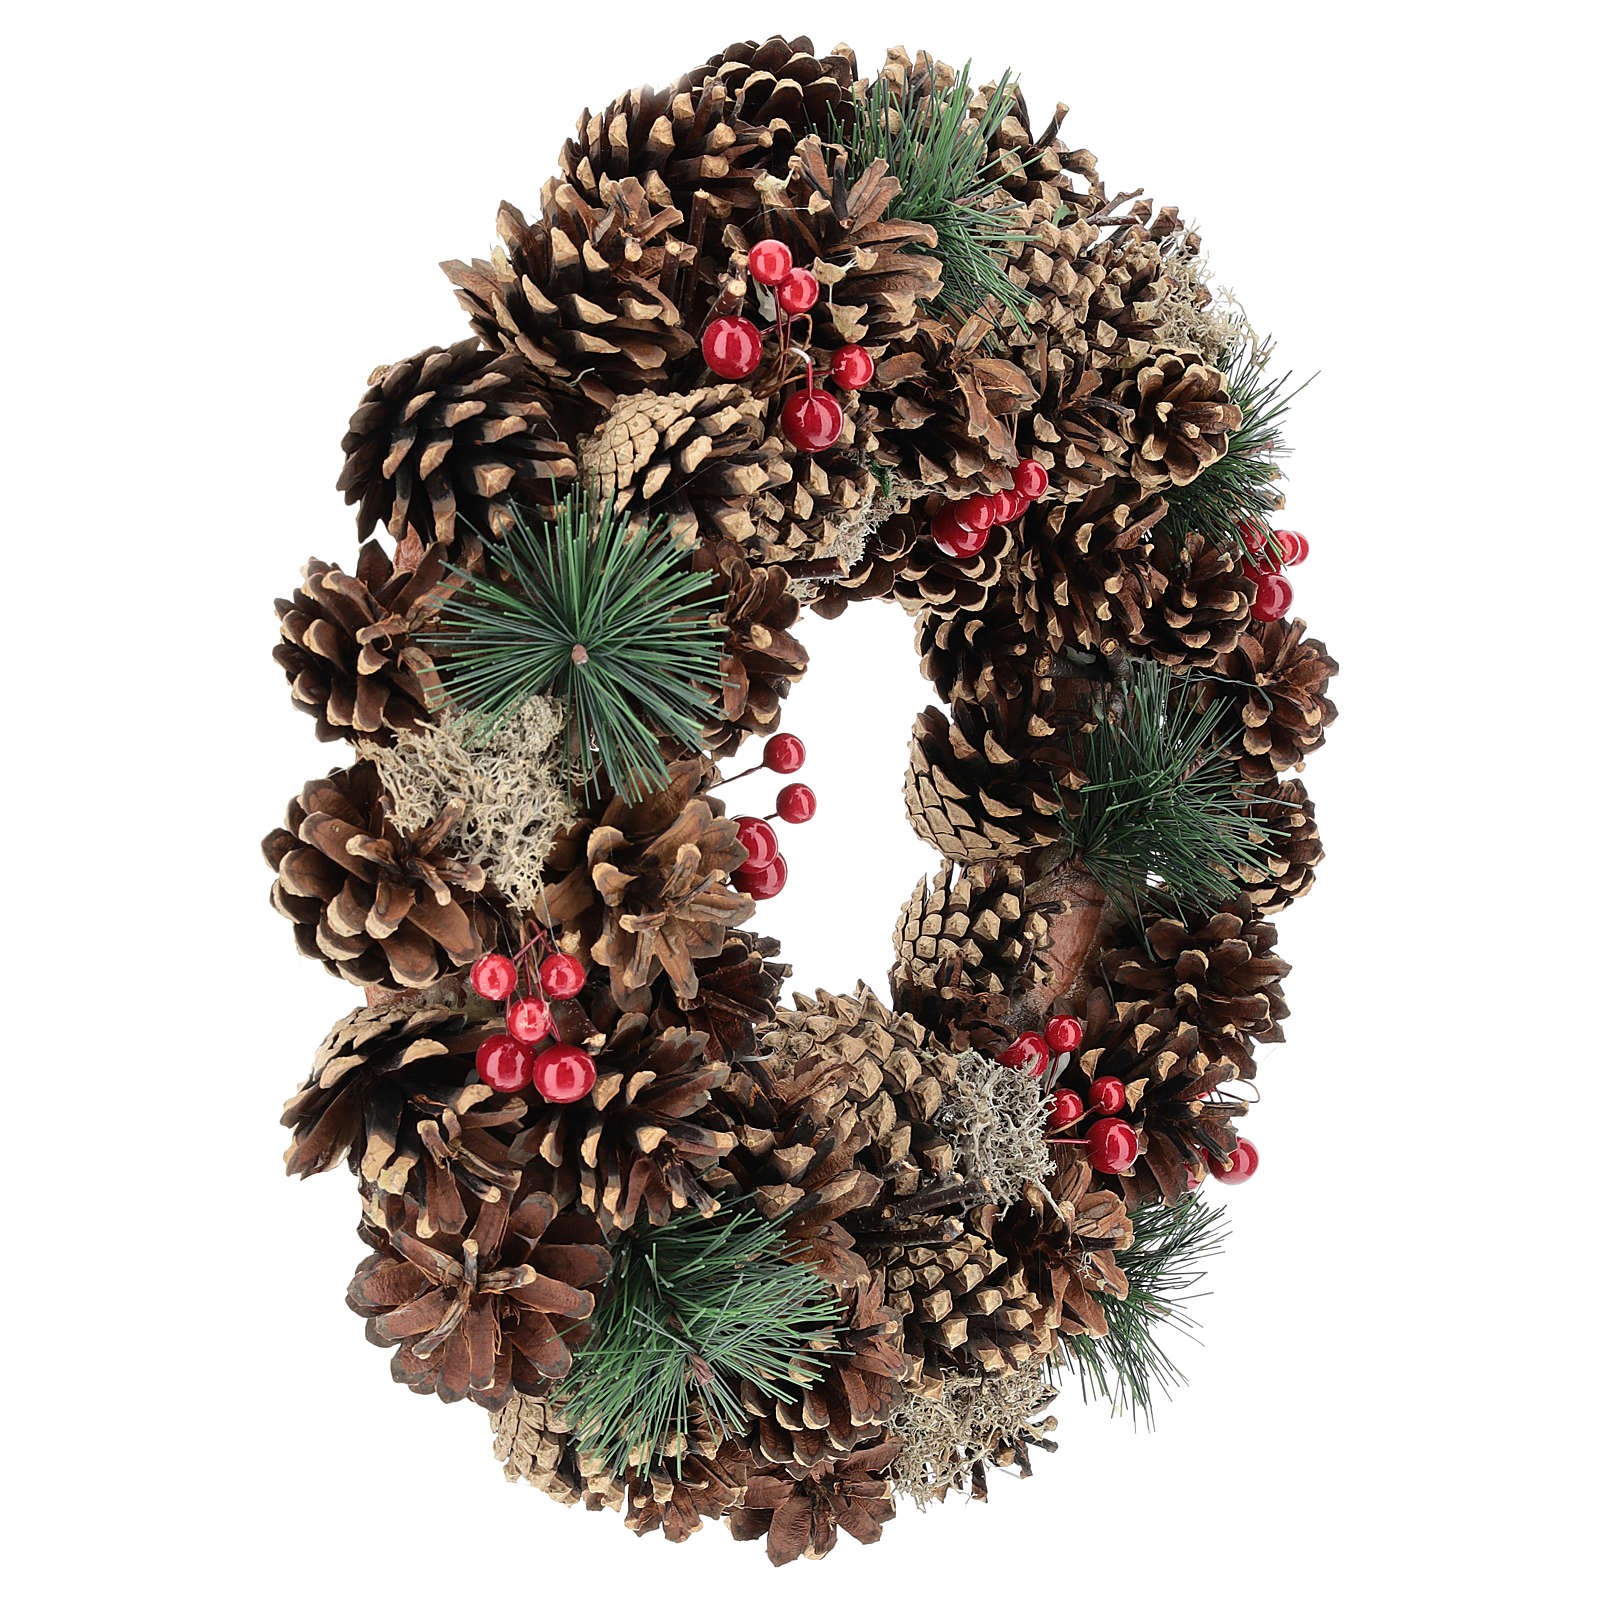 Decorazioni Natalizie Ghirlande.Ghirlanda Decorata Natale Pigne Bacche Rosse 32 Cm Vendita Online Su Holyart